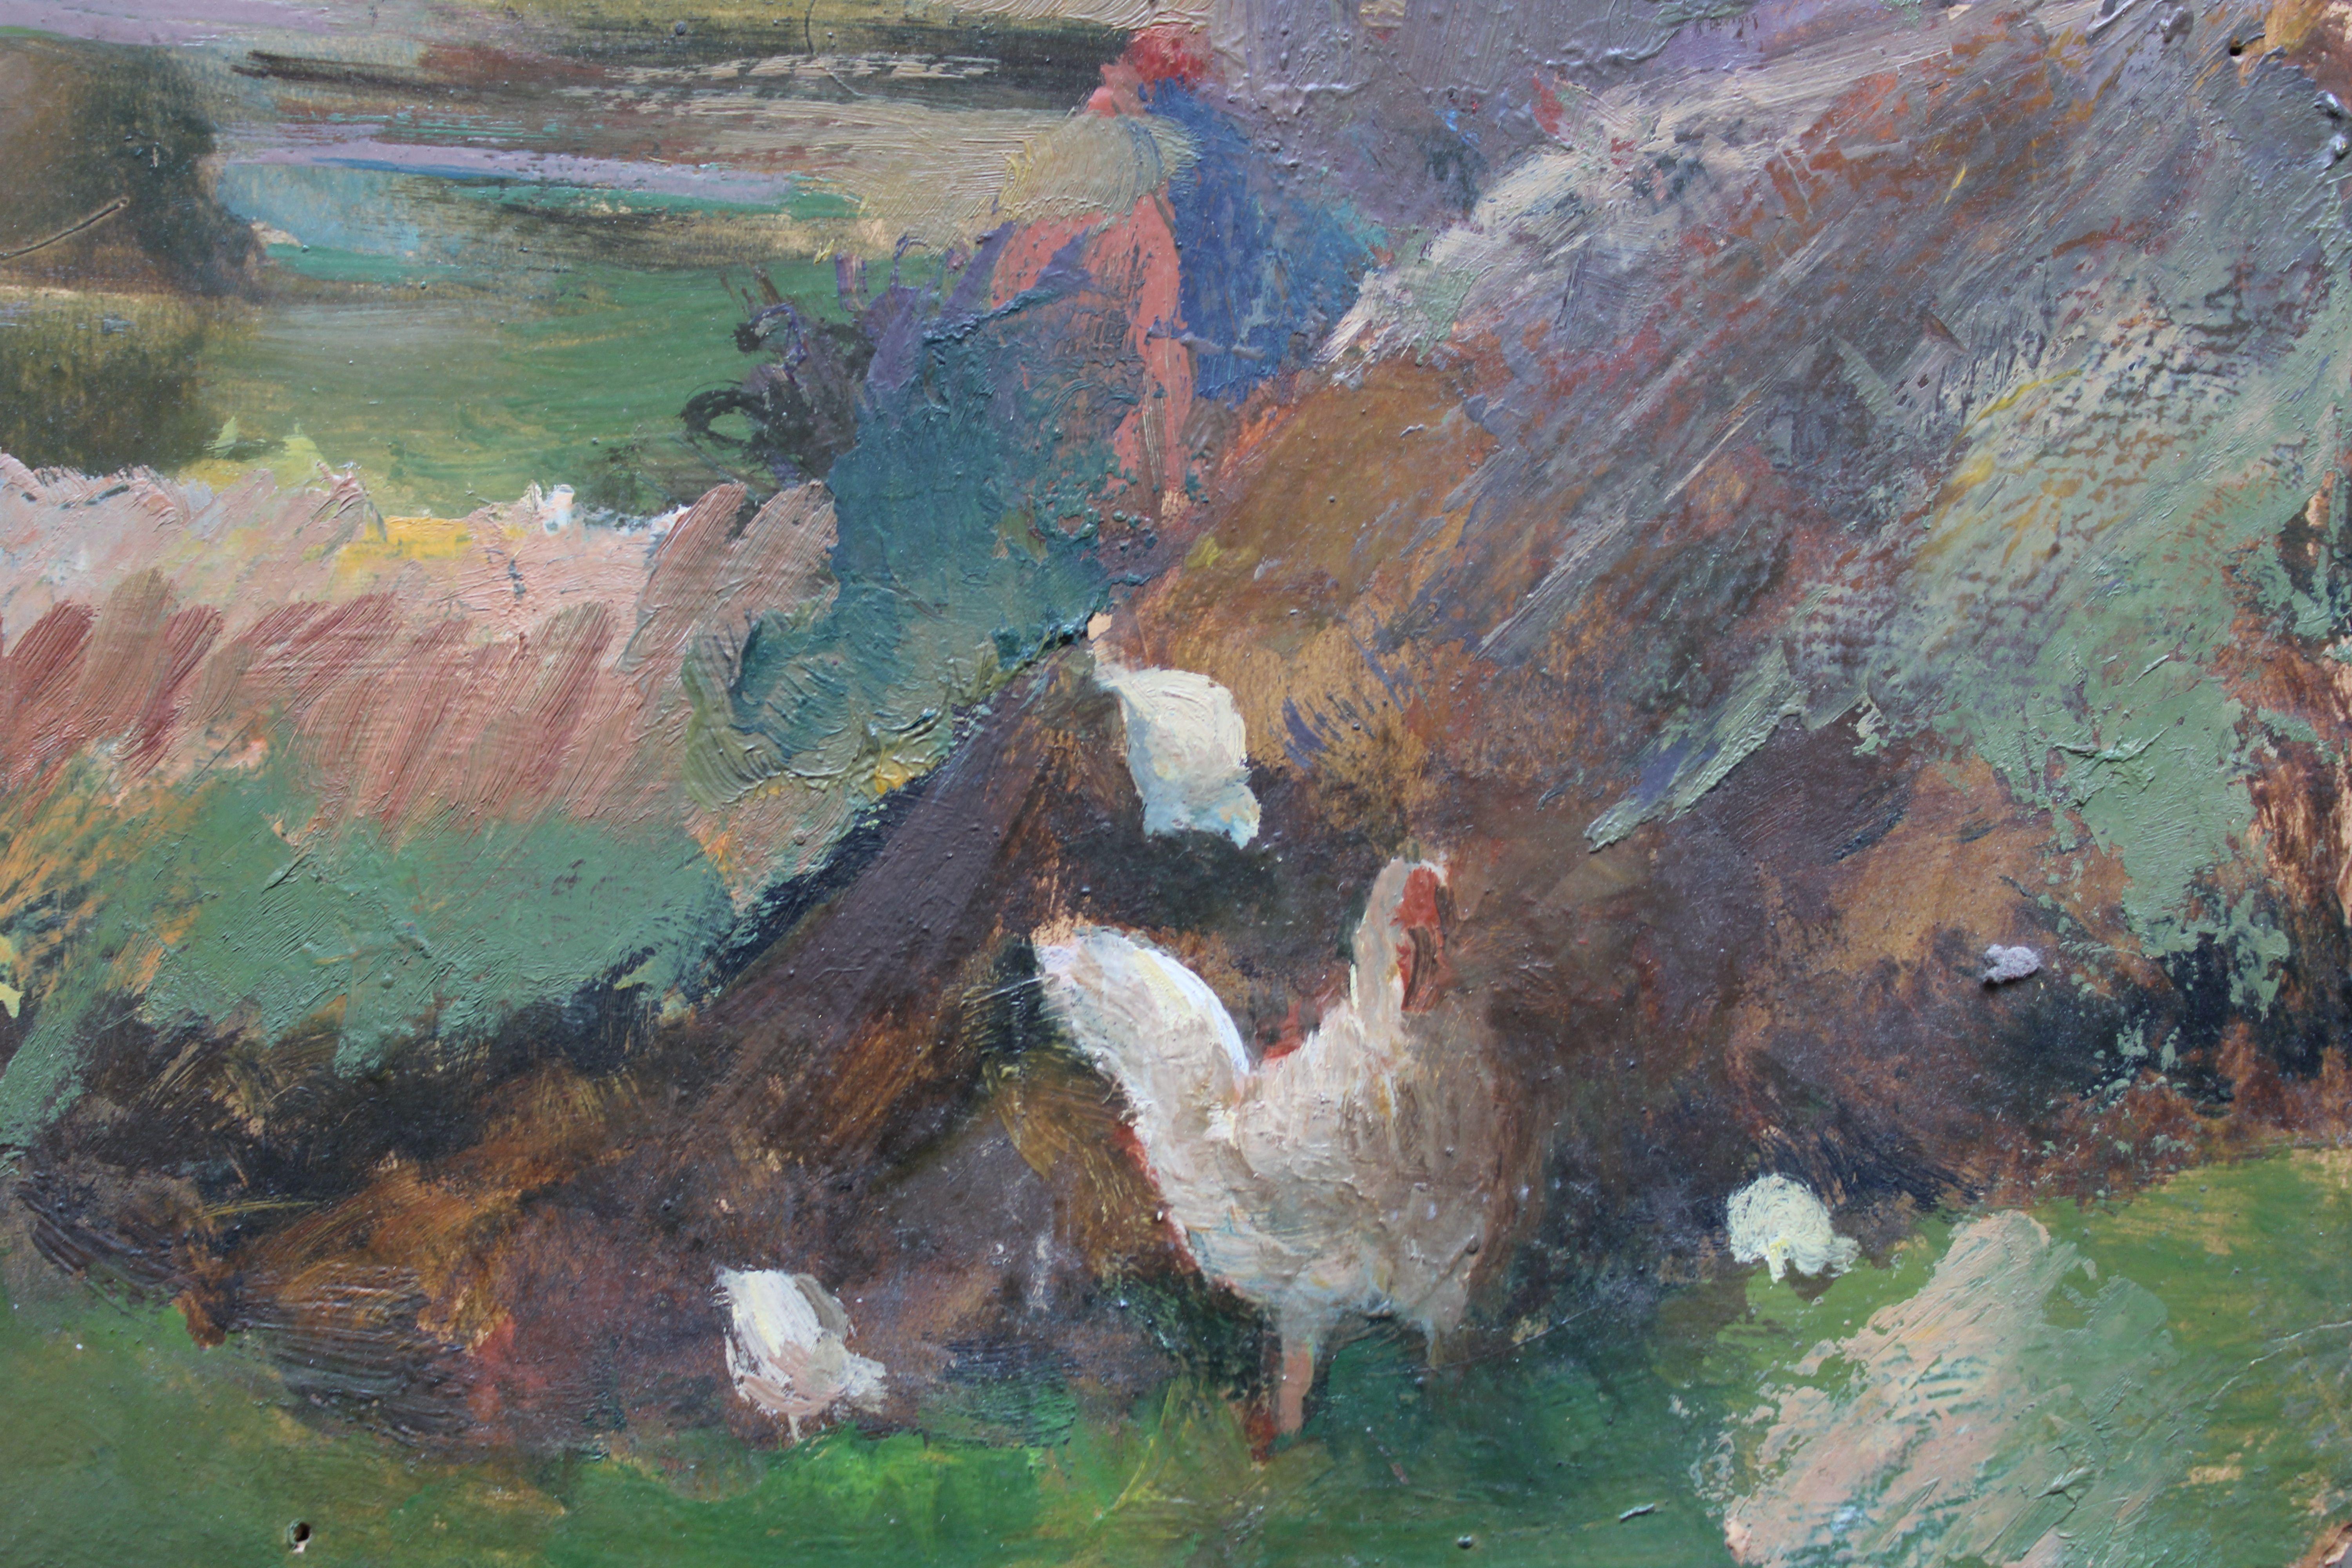 Behind the barn  1950s. Oil on cardboard. 42.5x49.5 cm - Impressionist Painting by Aleksandra Belcova